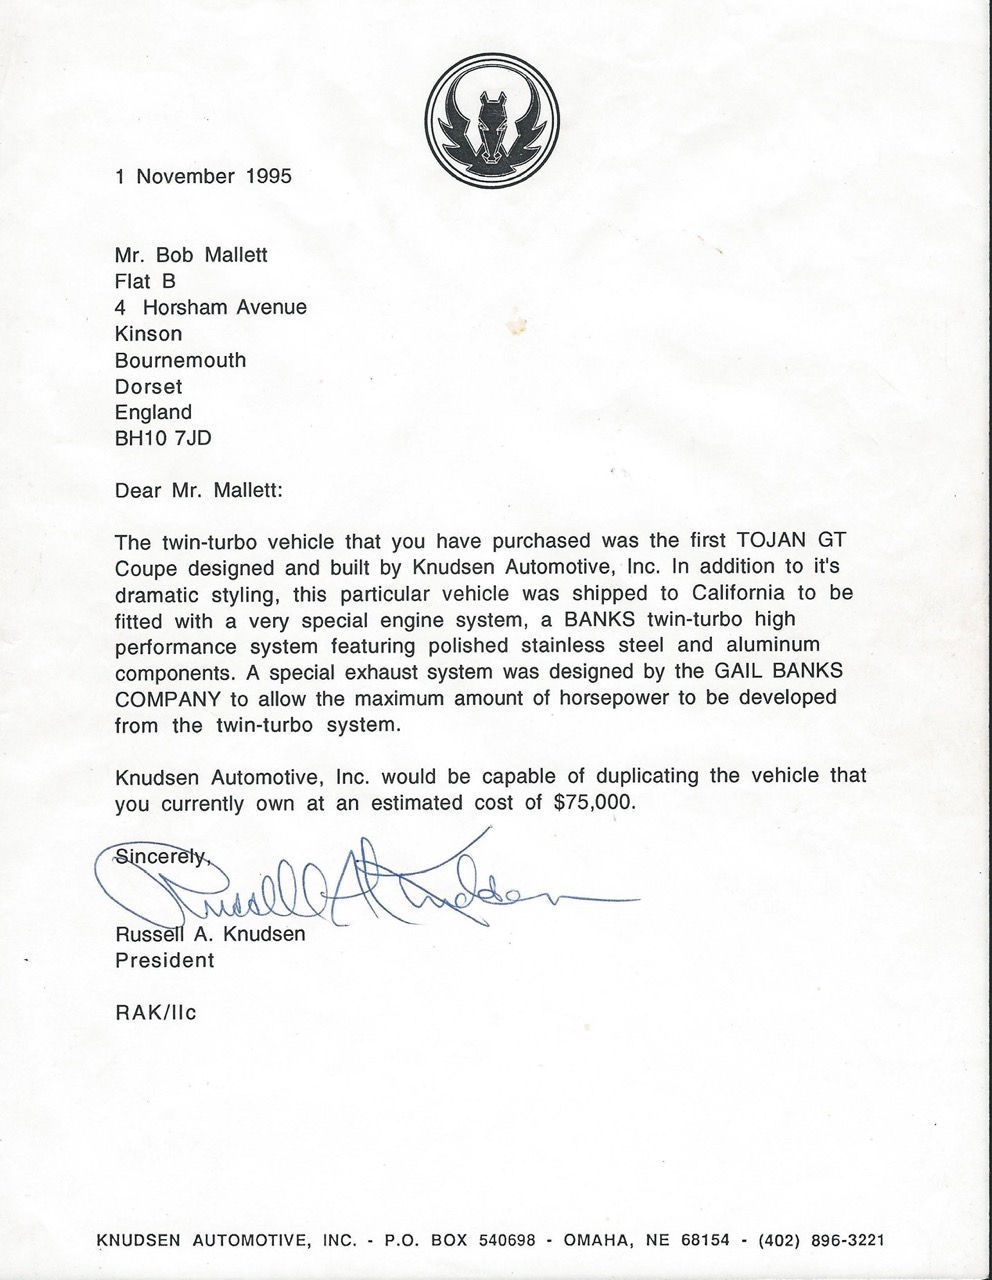 1984 Pontiac Tojan letter